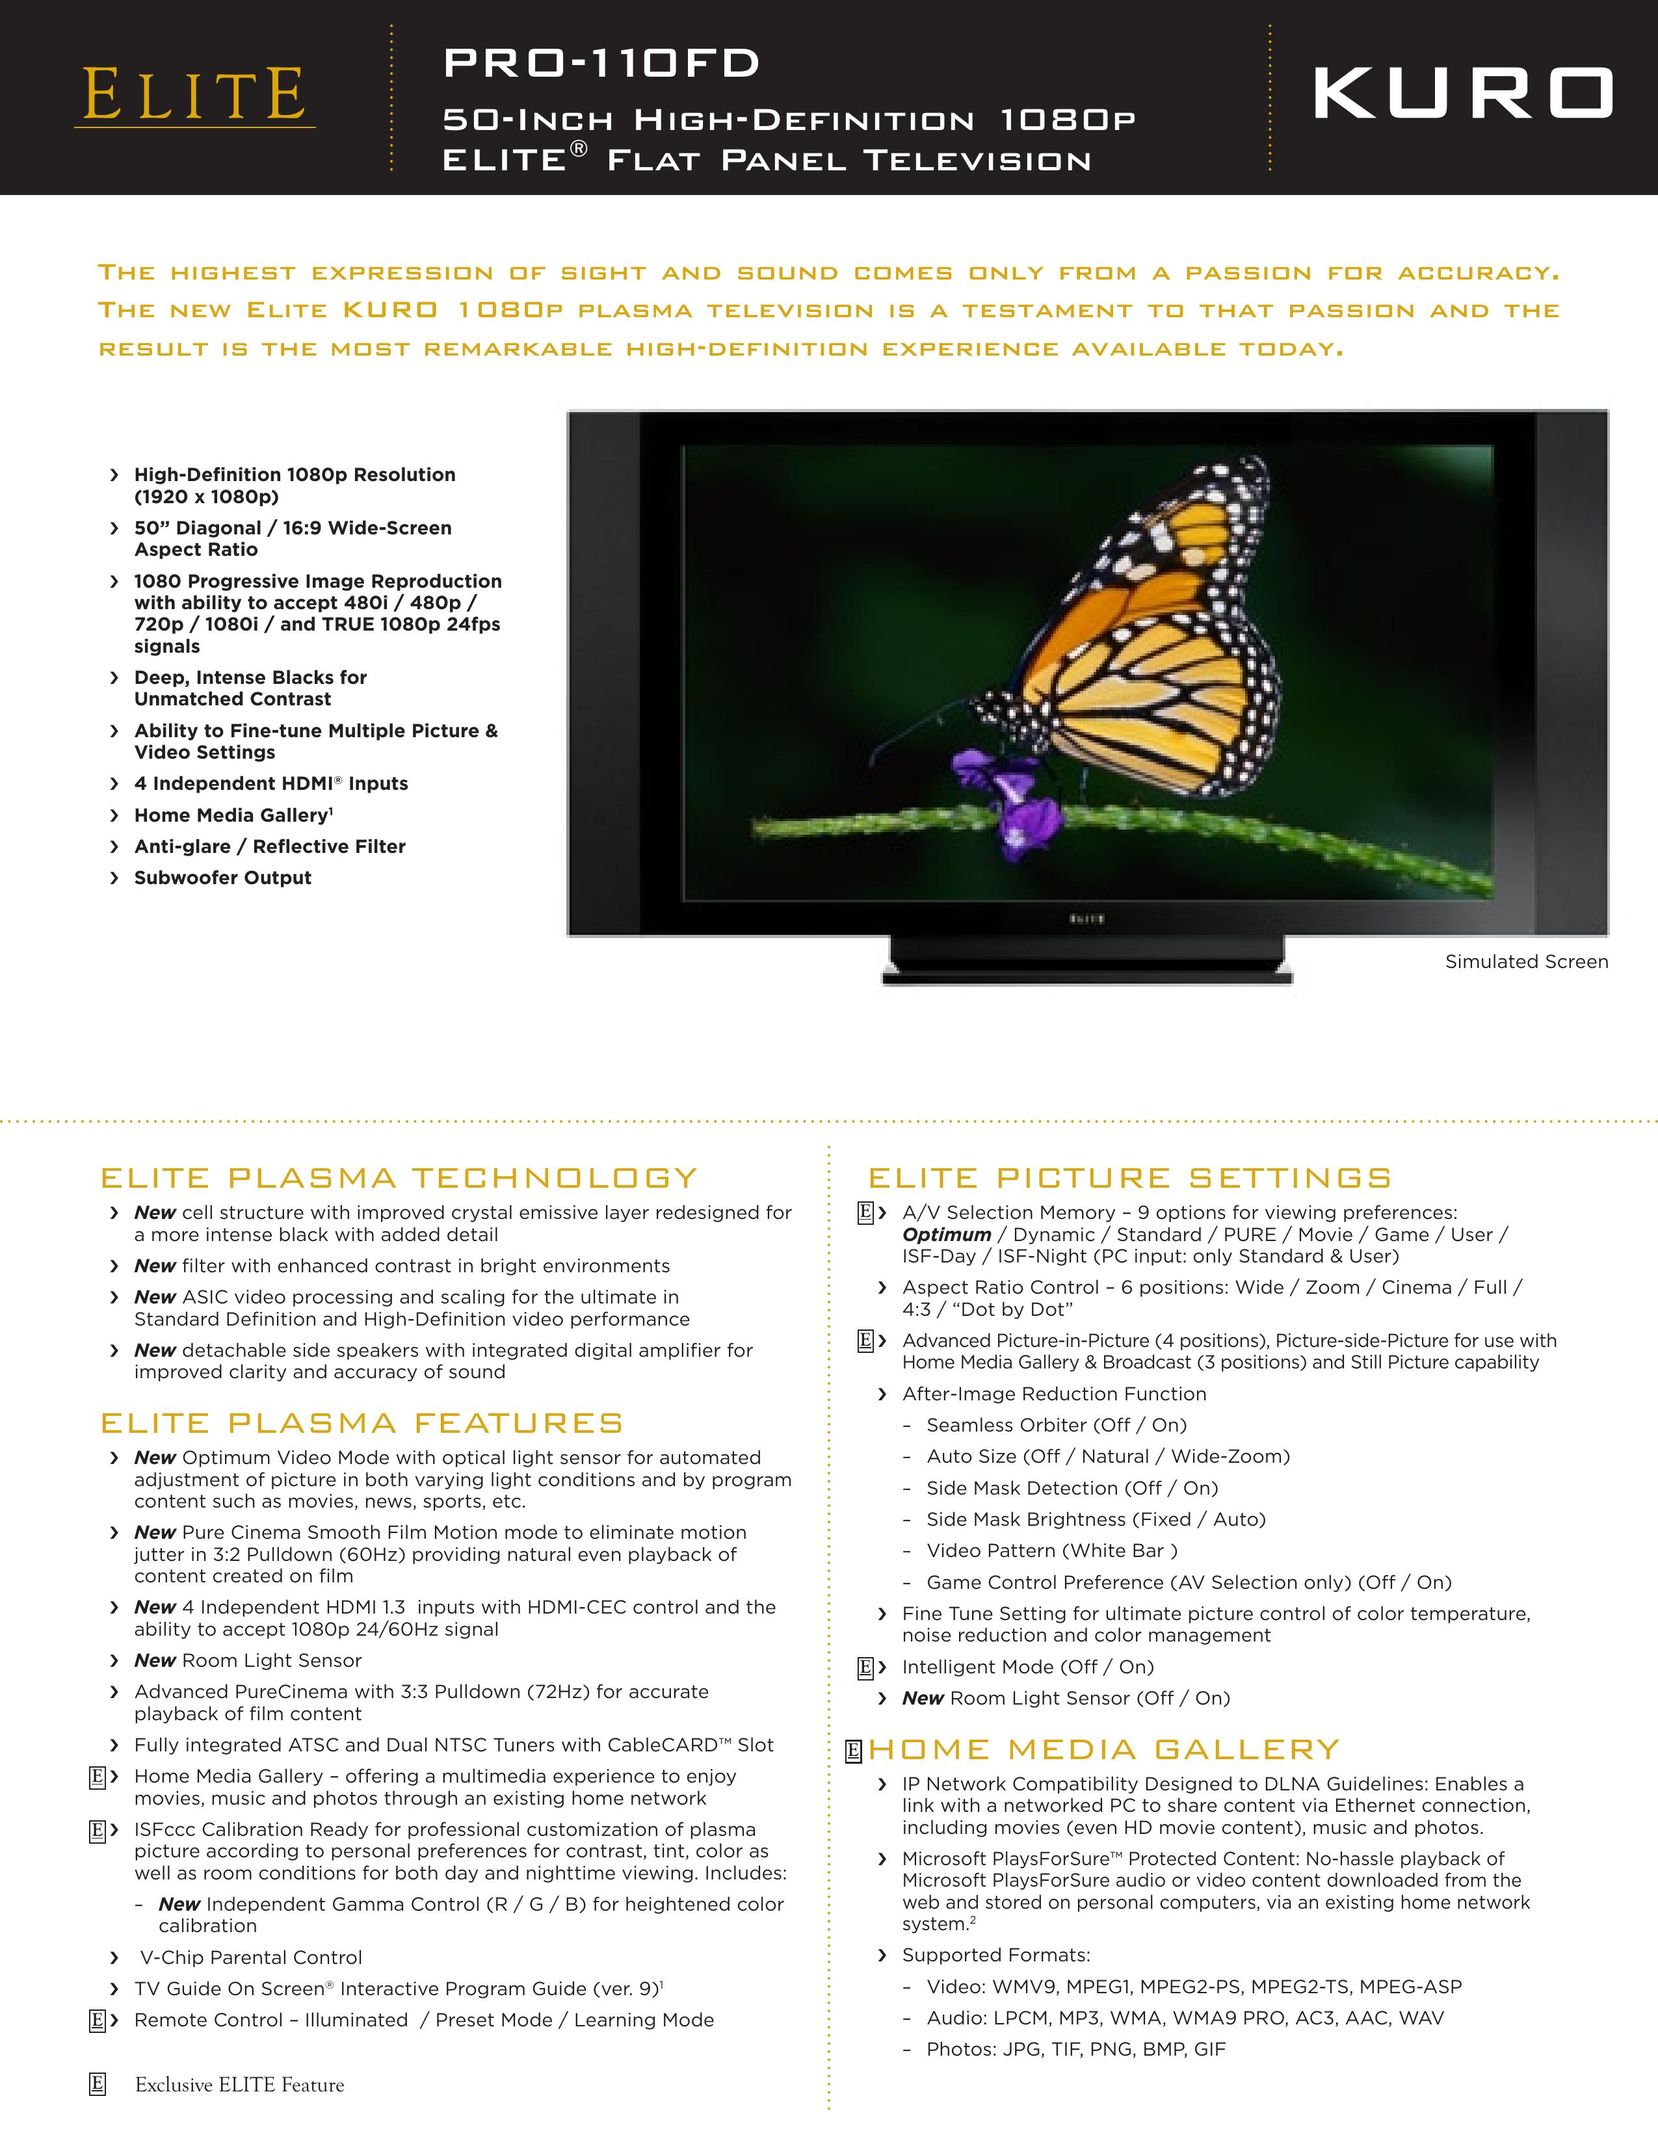 Elite PRO-110FD Flat Panel Television User Manual